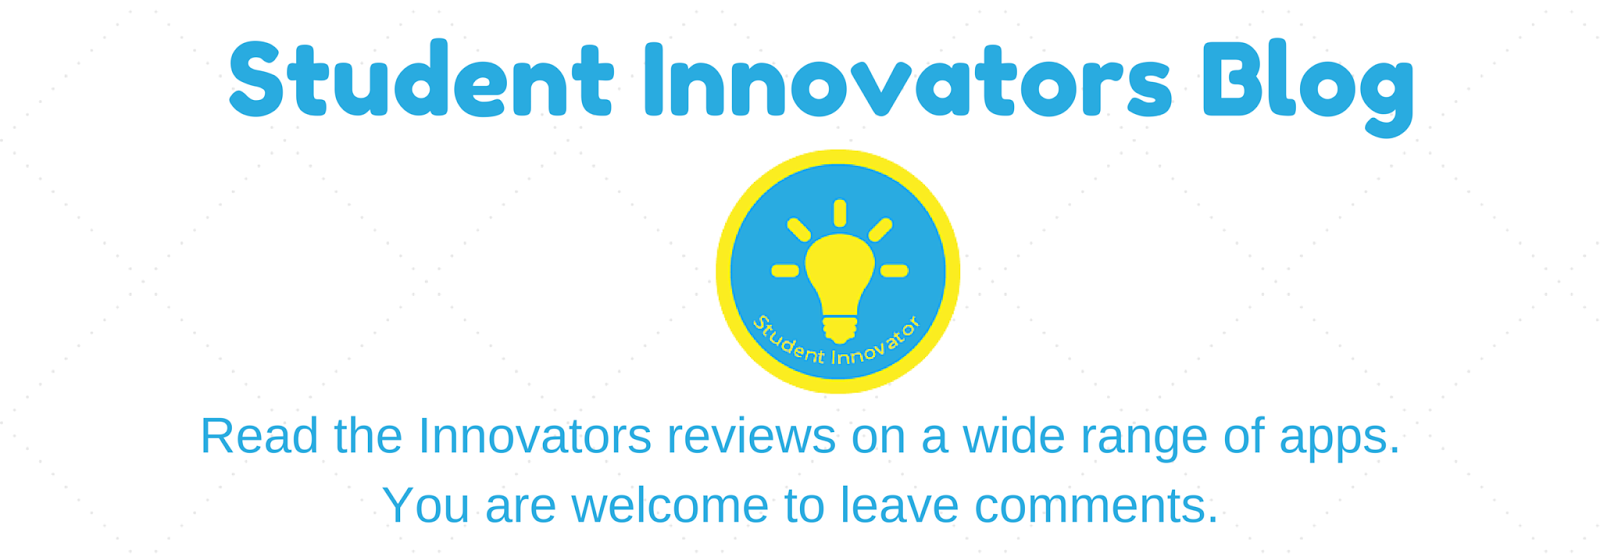 Student Innovators Blog